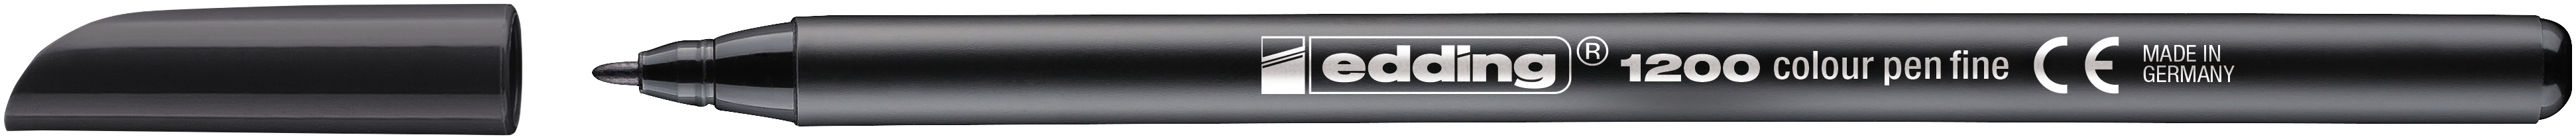 EDDING Stilos fibre 1200 0.5-1mm 1200-1 noir